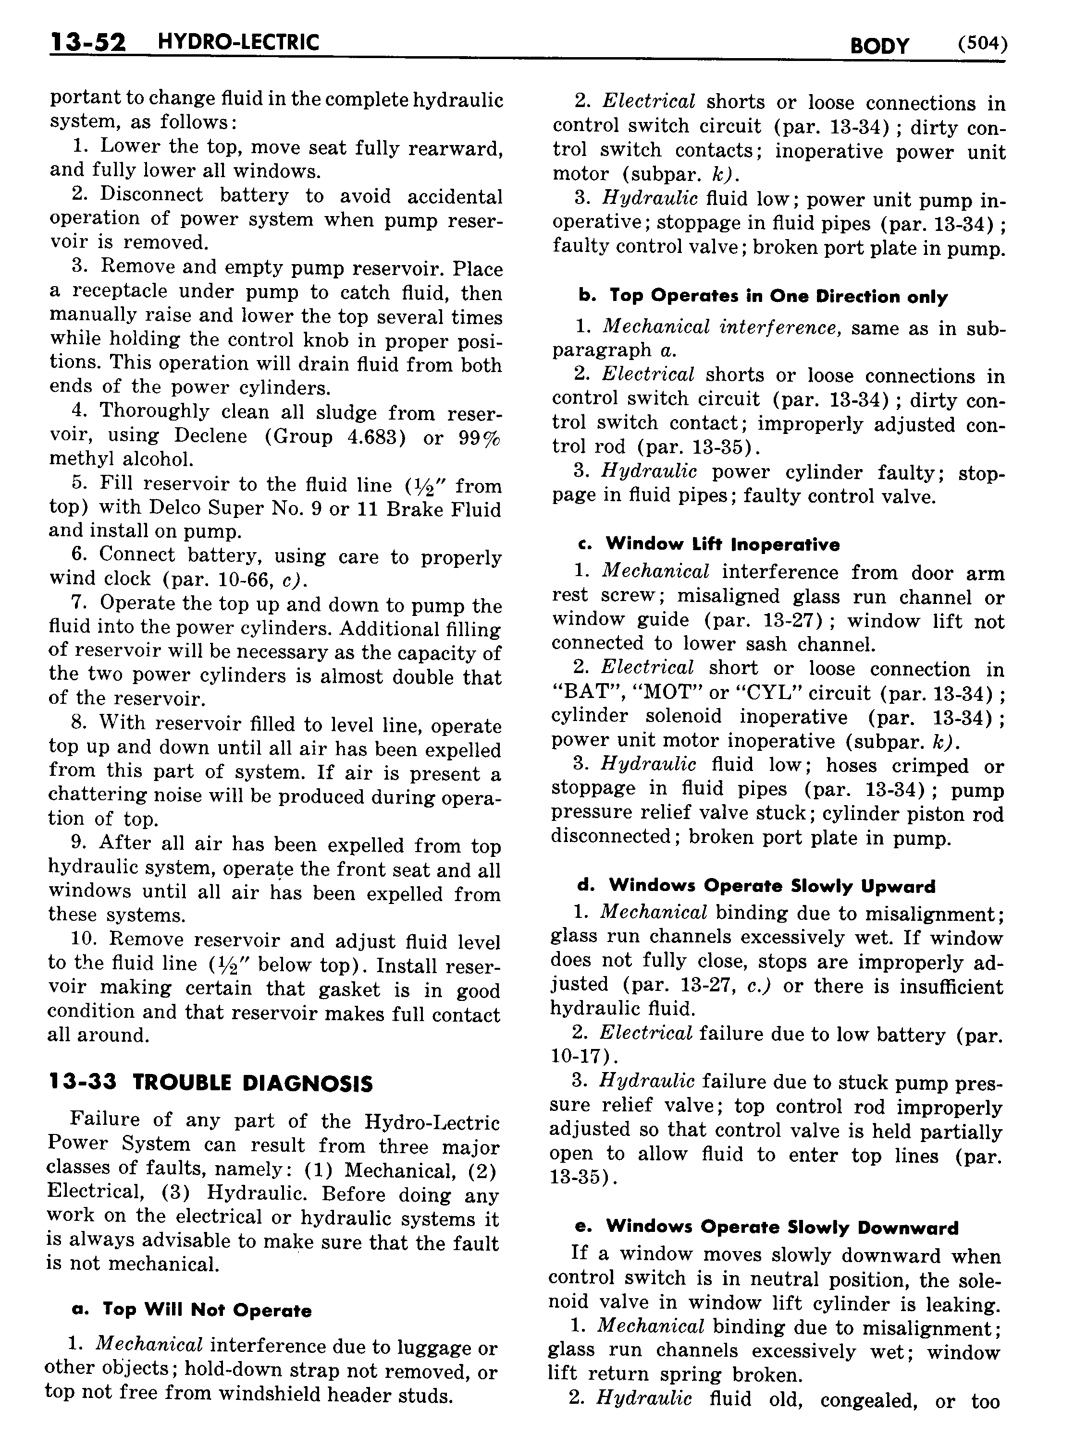 n_14 1948 Buick Shop Manual - Body-052-052.jpg